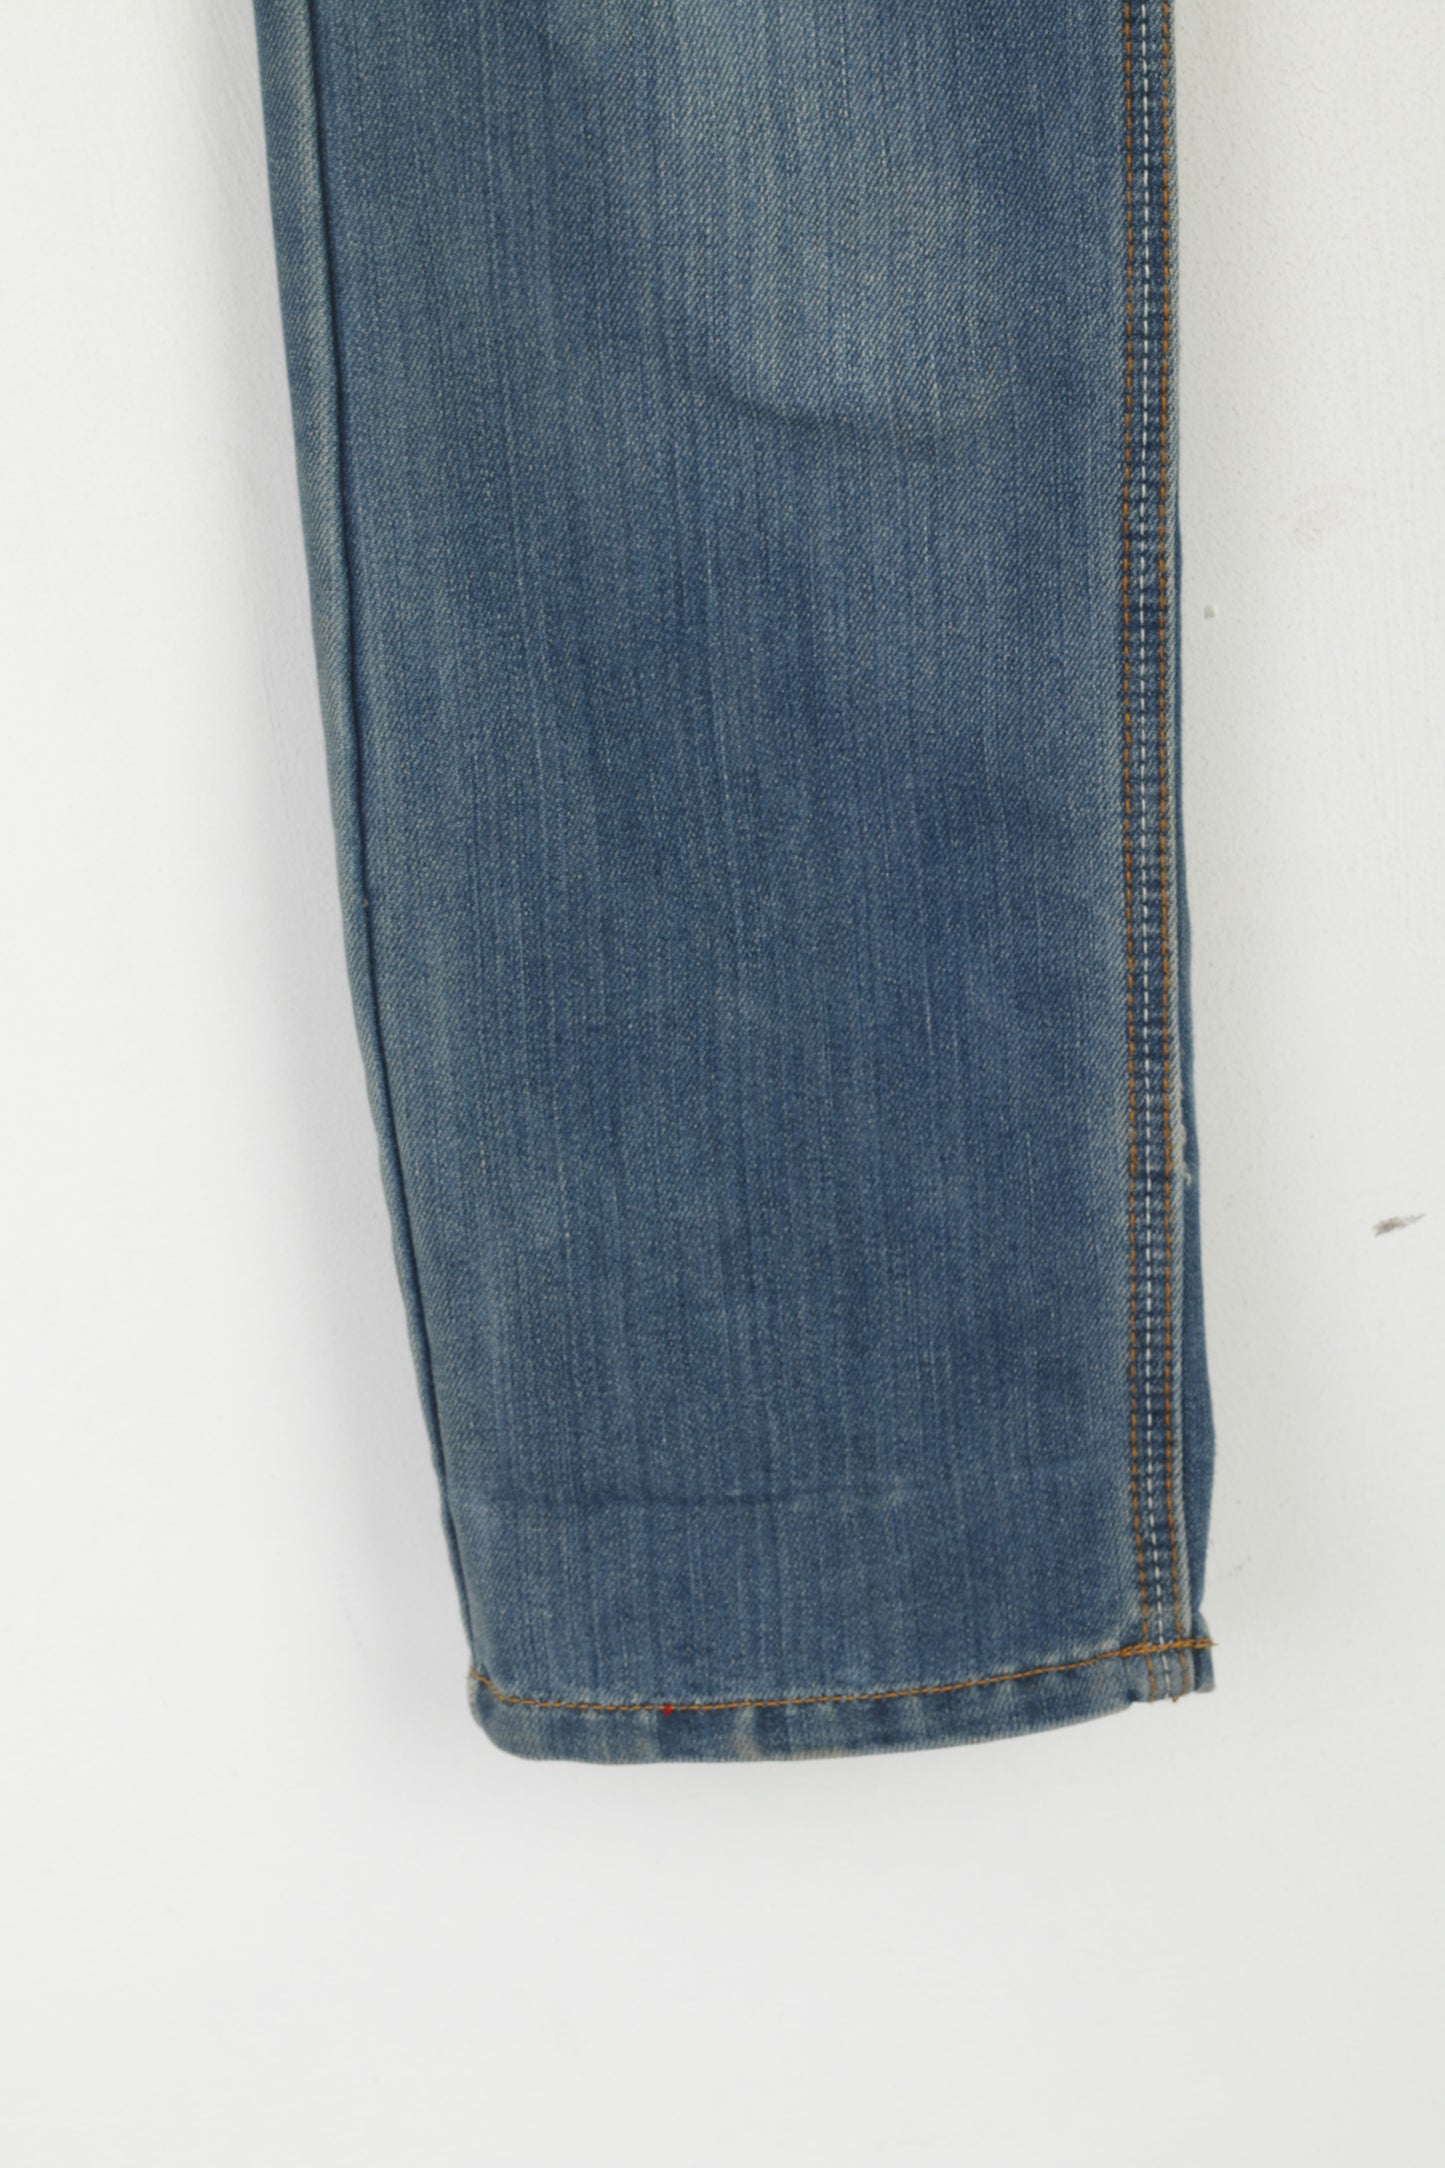 Diesel Industry Women 27 Jeans Trousers Navy Denim Cotton Classic Straight Pants